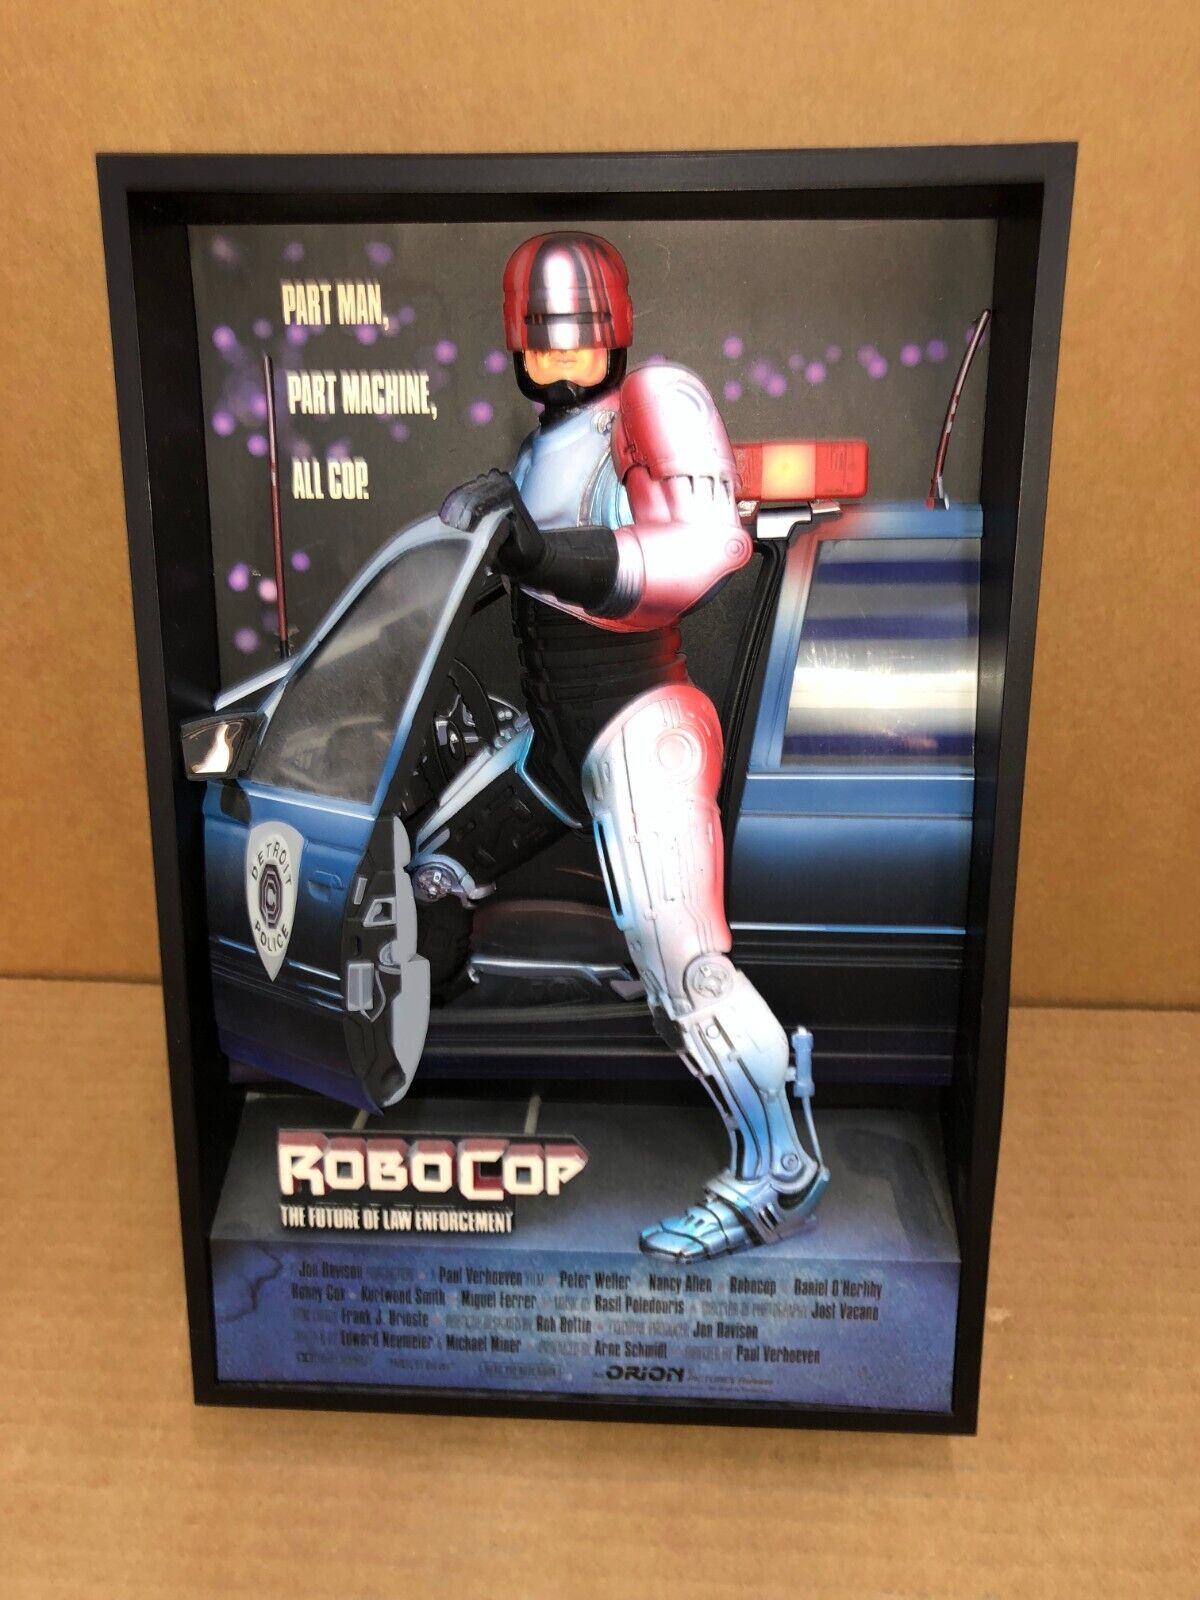 2007 McFarlane Toys Pop Culture Masterworks Robocop 3D Movie Poster